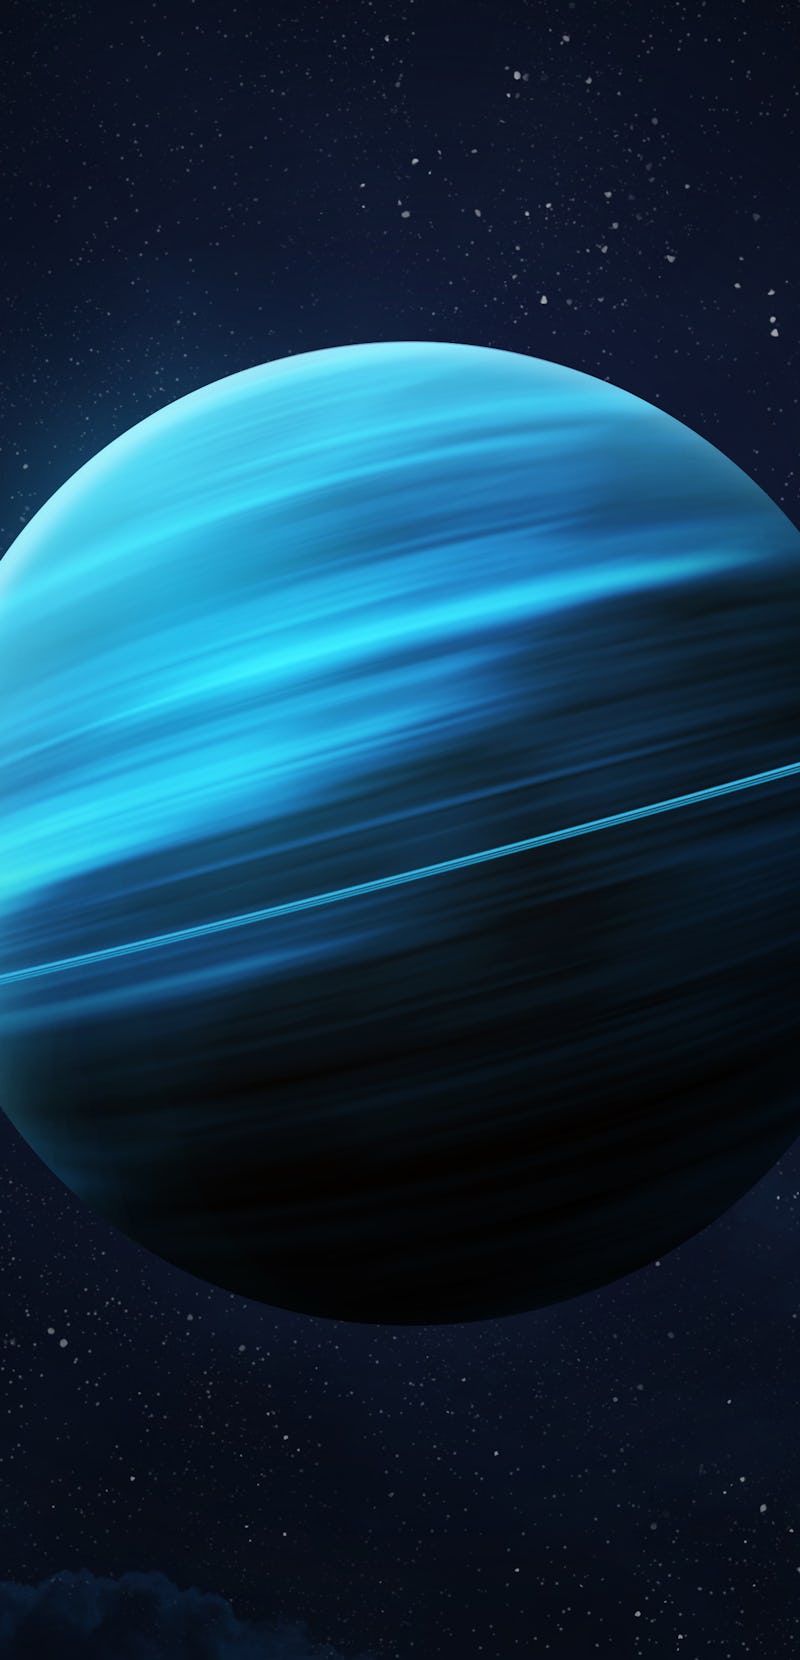 Space, nebula and planet Uranus